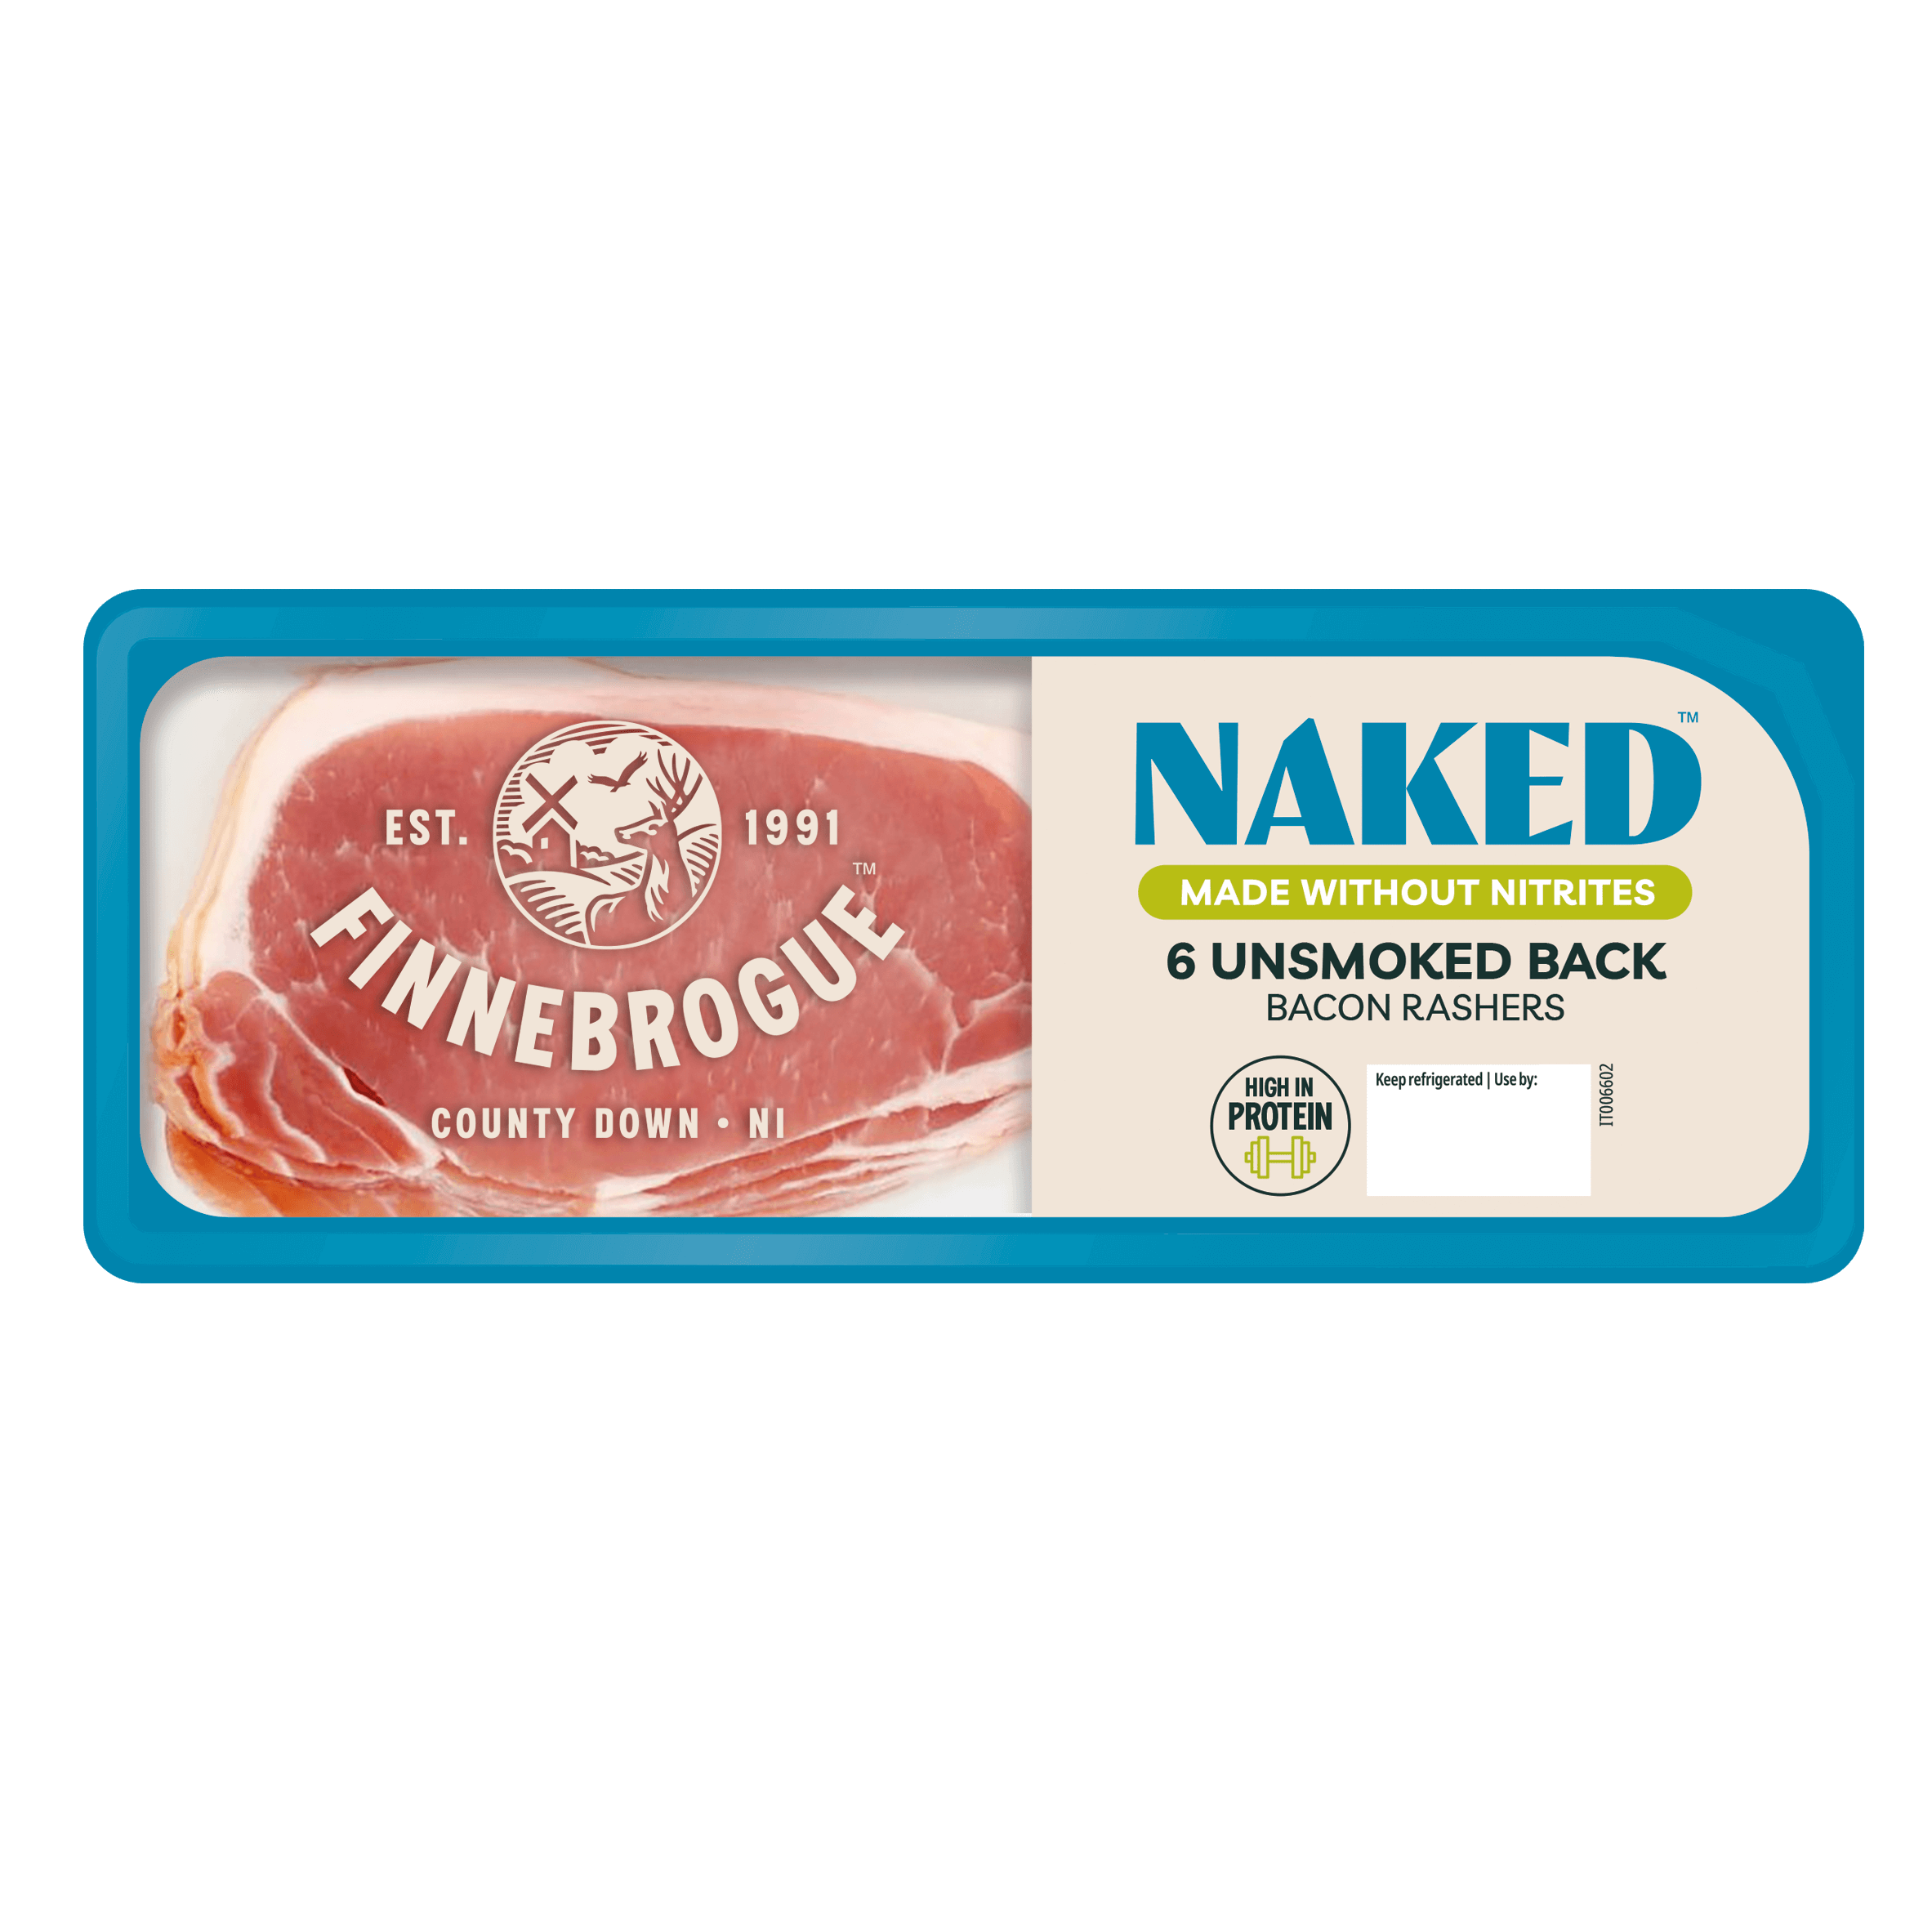 Finnebrogue naked unsmoked back bacon rashers.